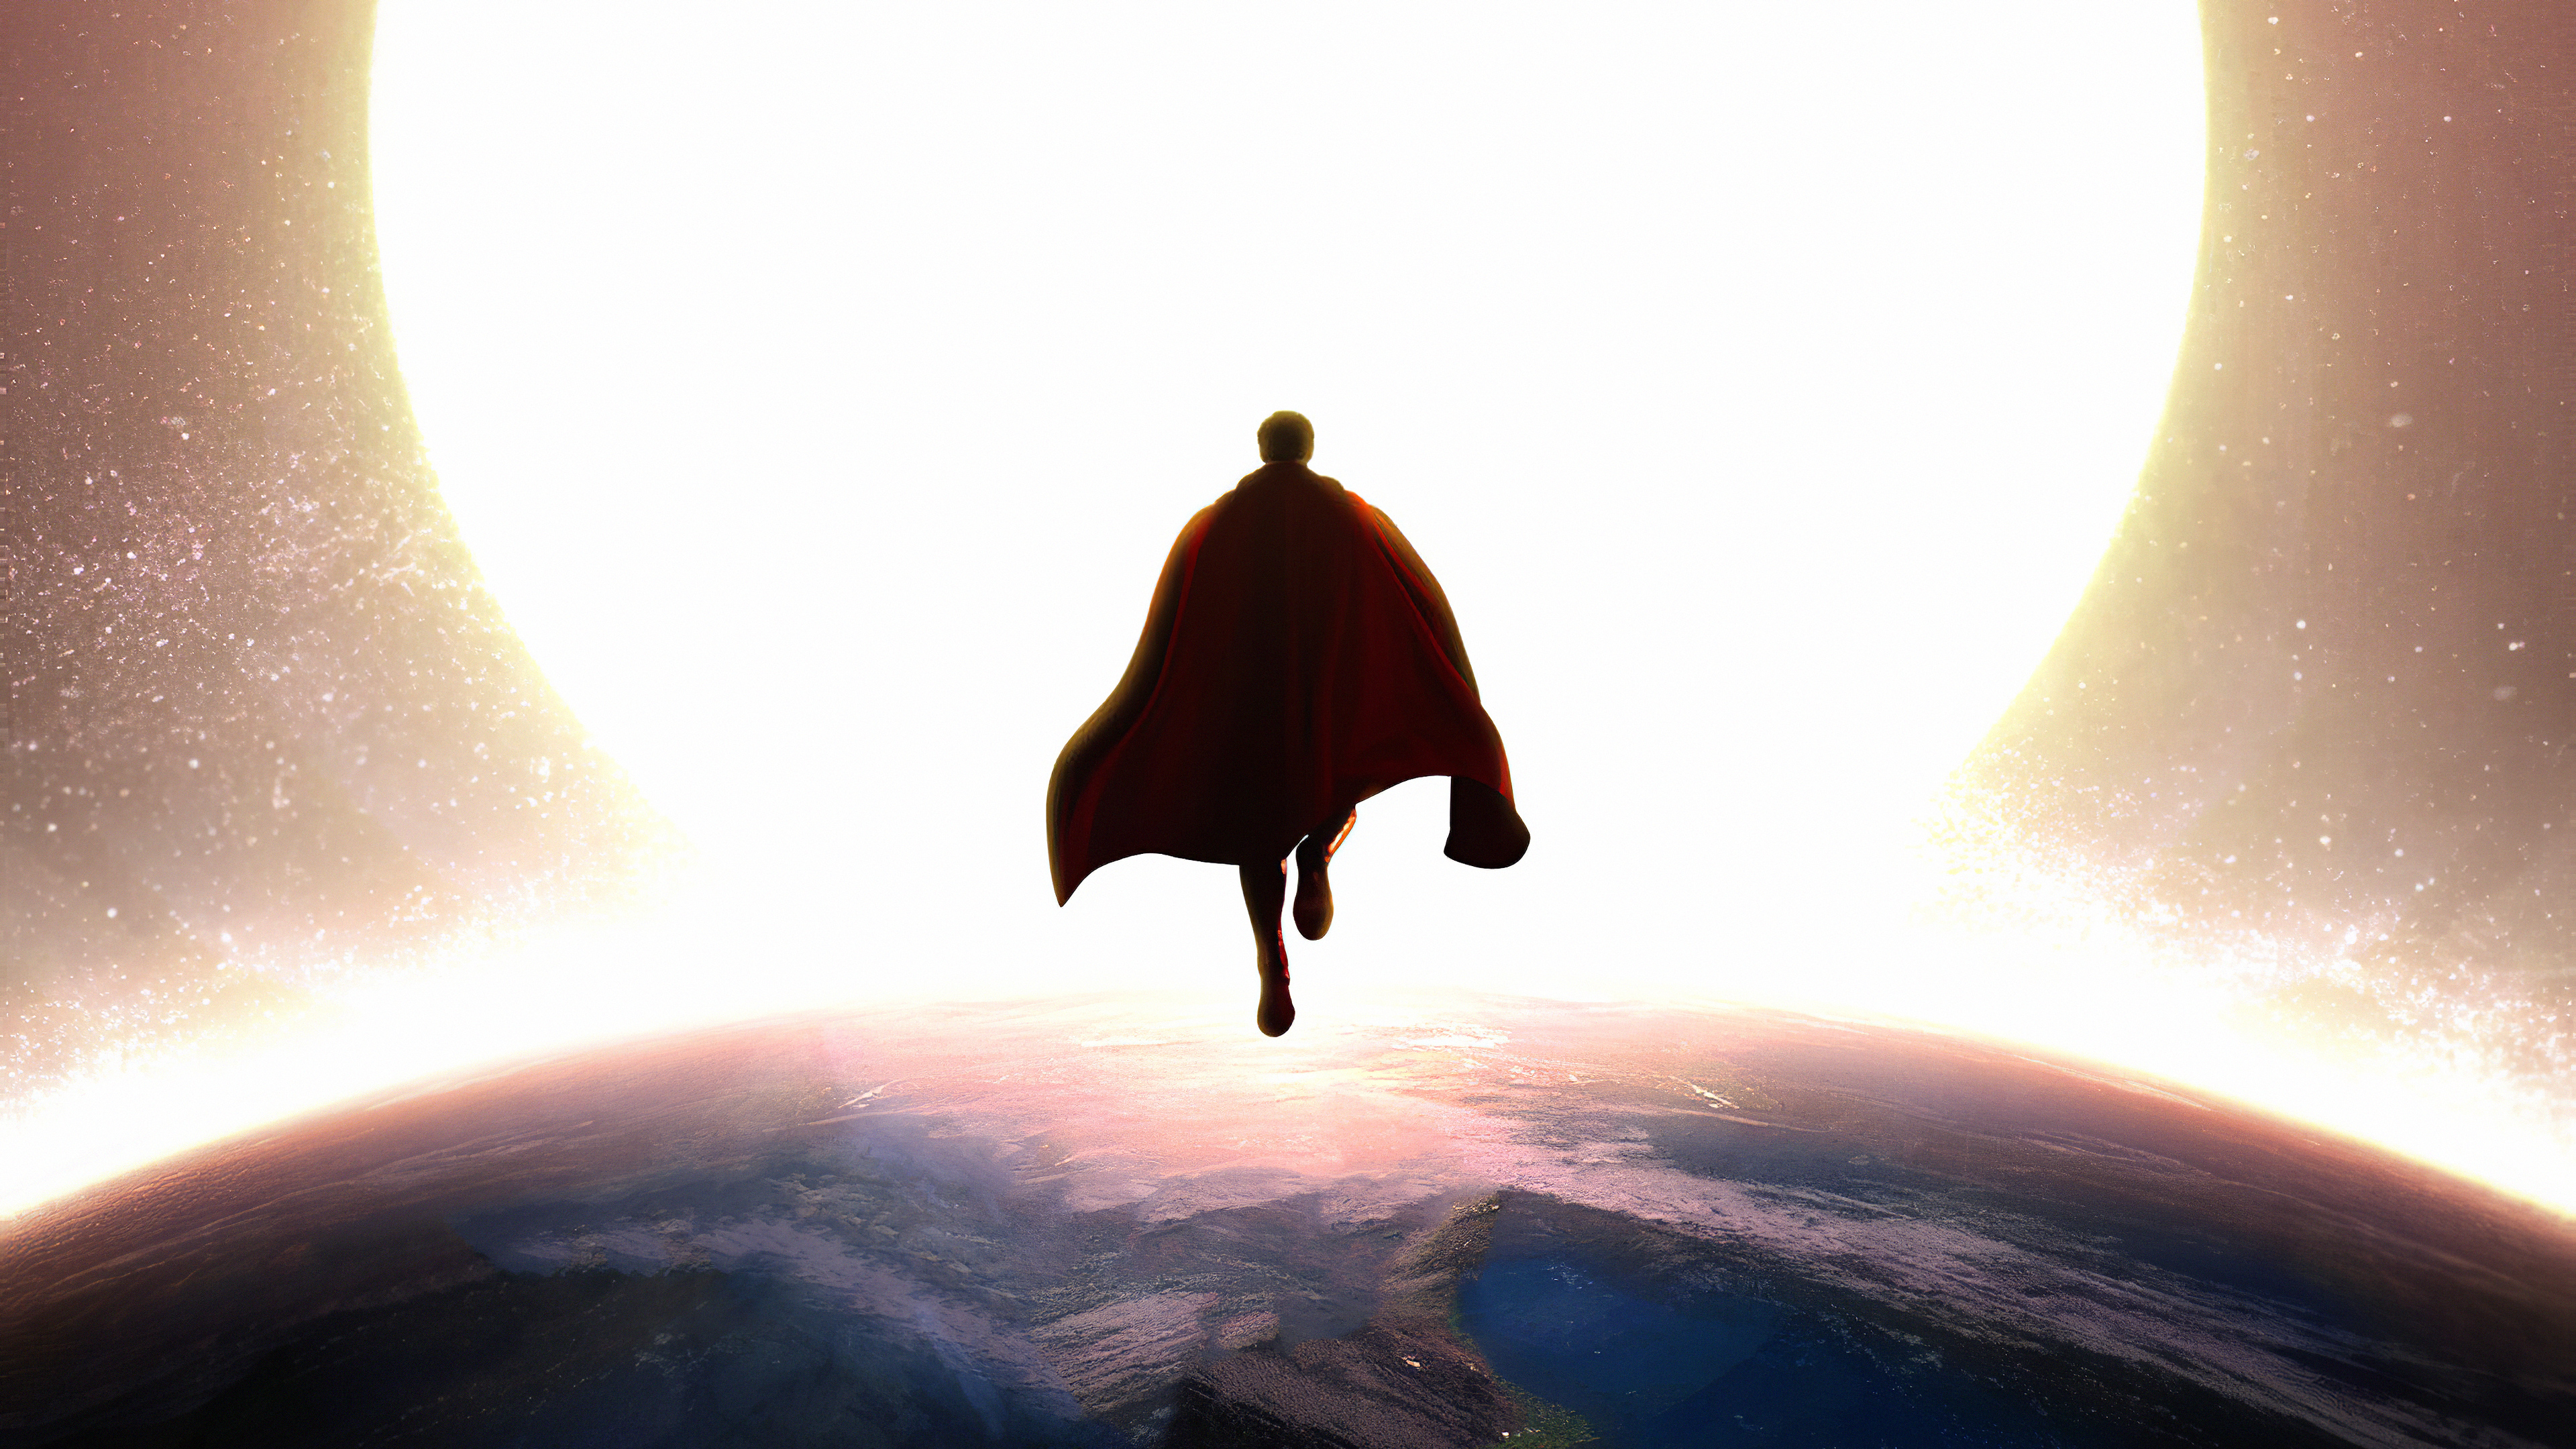 superman in sky art 1576093368 - Superman in Sky Art - superman wallpaper phone 4k, superman art 4k wallpaper, Super man wallpaper 4k hd, 4k wallpaper superman